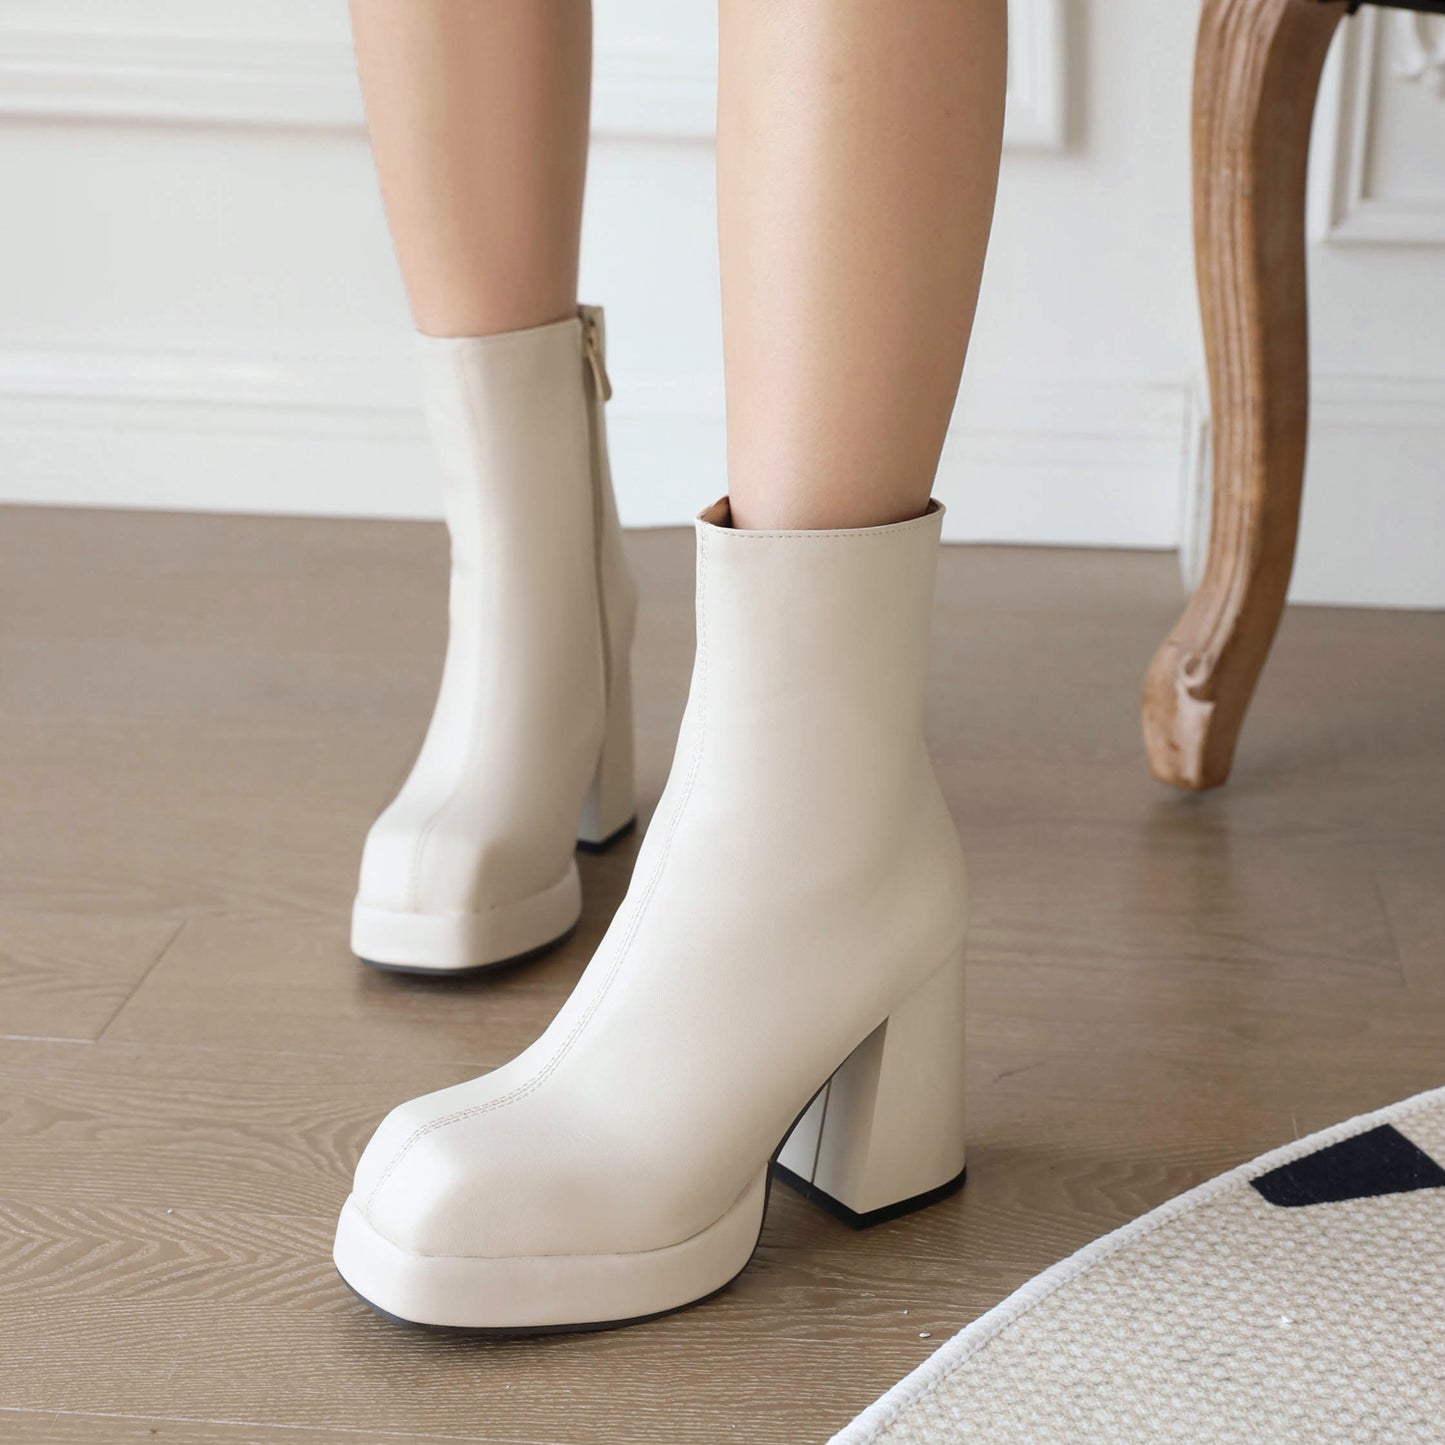 Women's Square Toe Side Zippers Block Heel Platform Short Boots